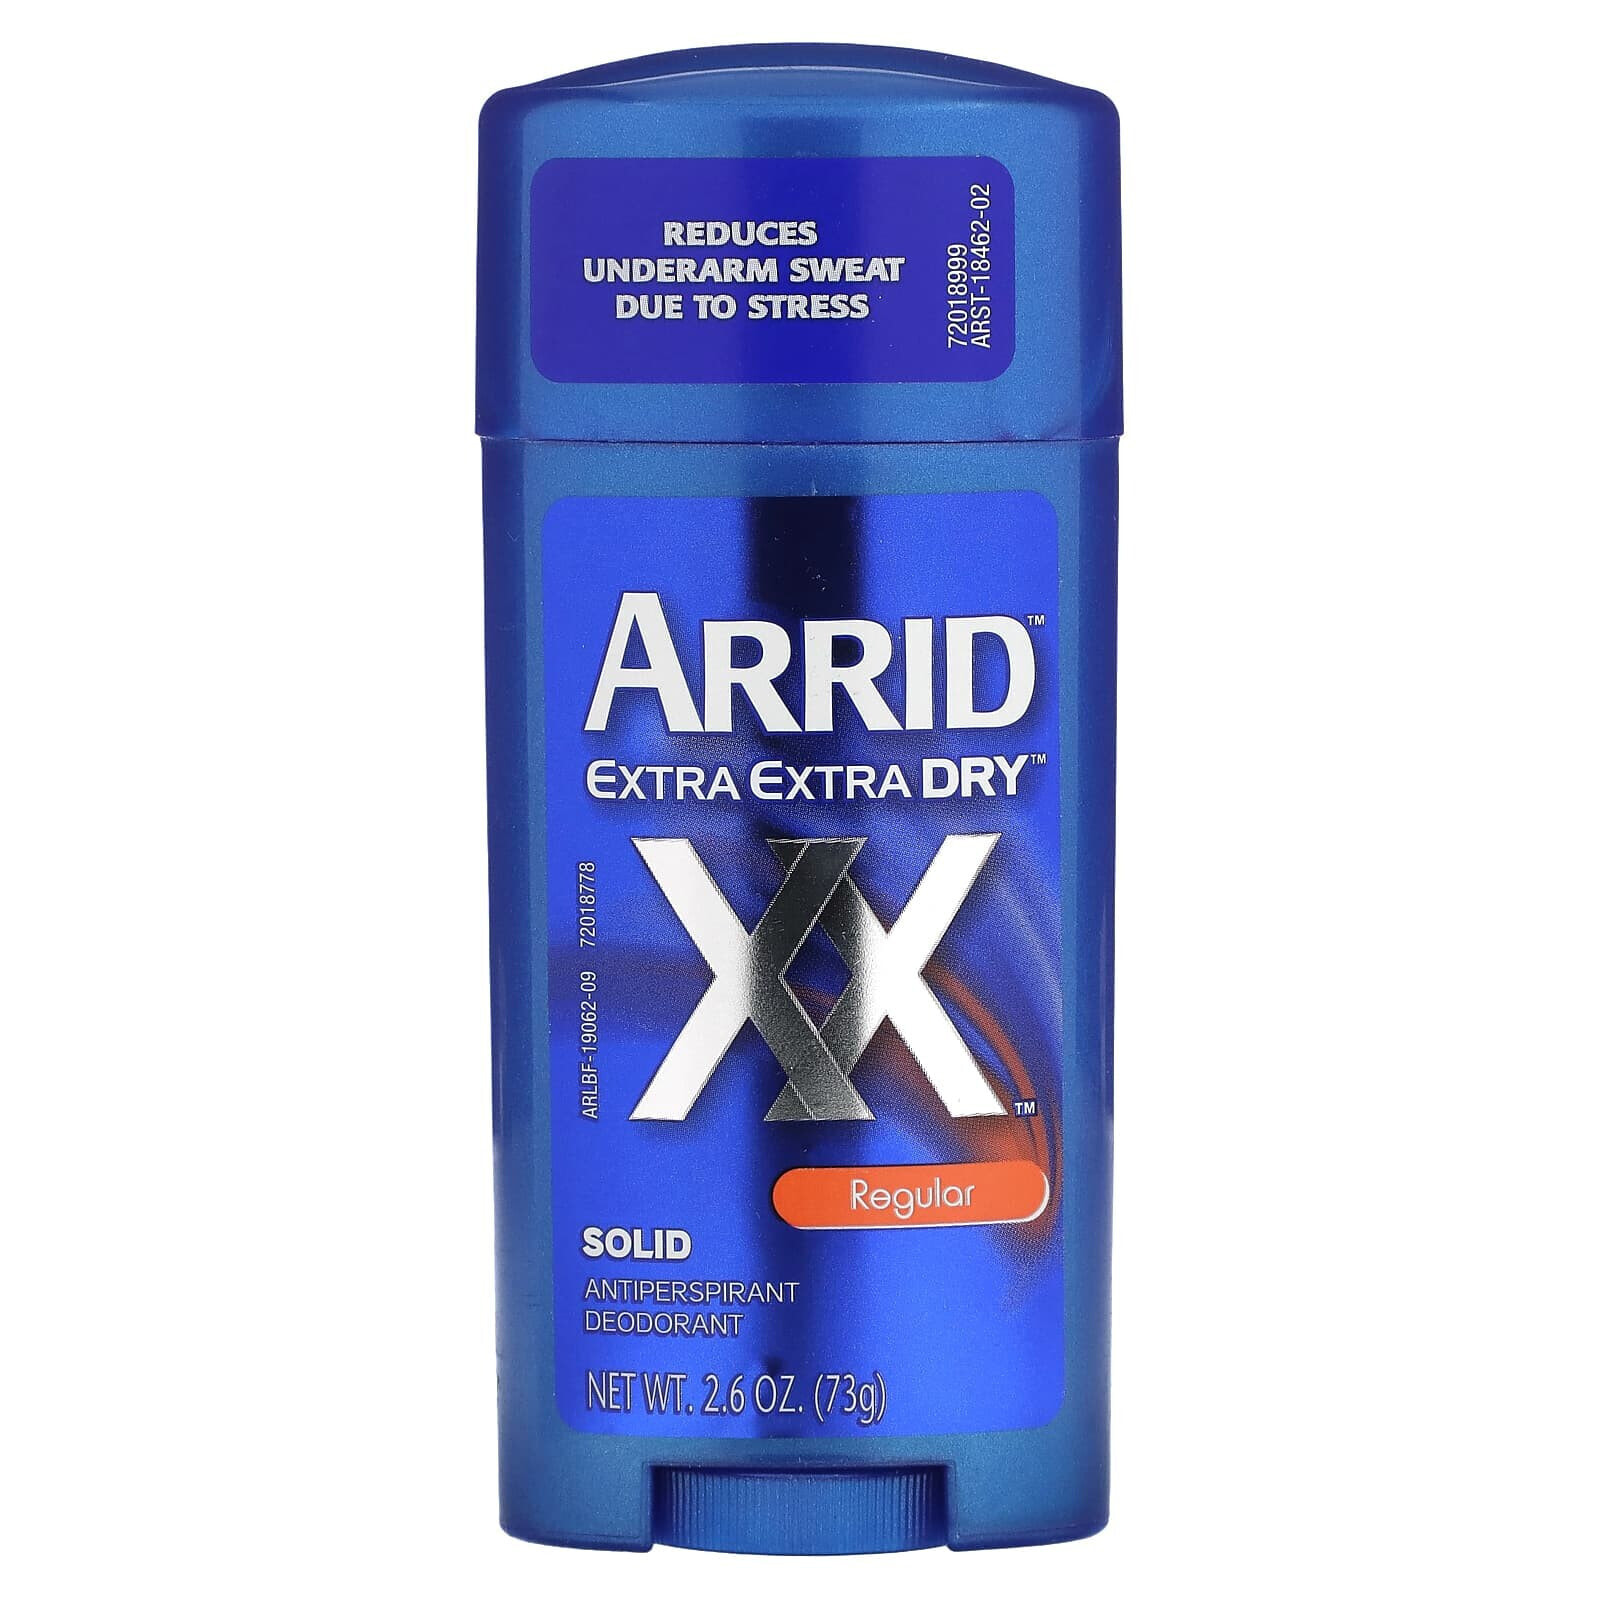 Extra Extra Dry XX, Solid Antiperspirant Deodorant, Regular, 2.6 oz (73 g)